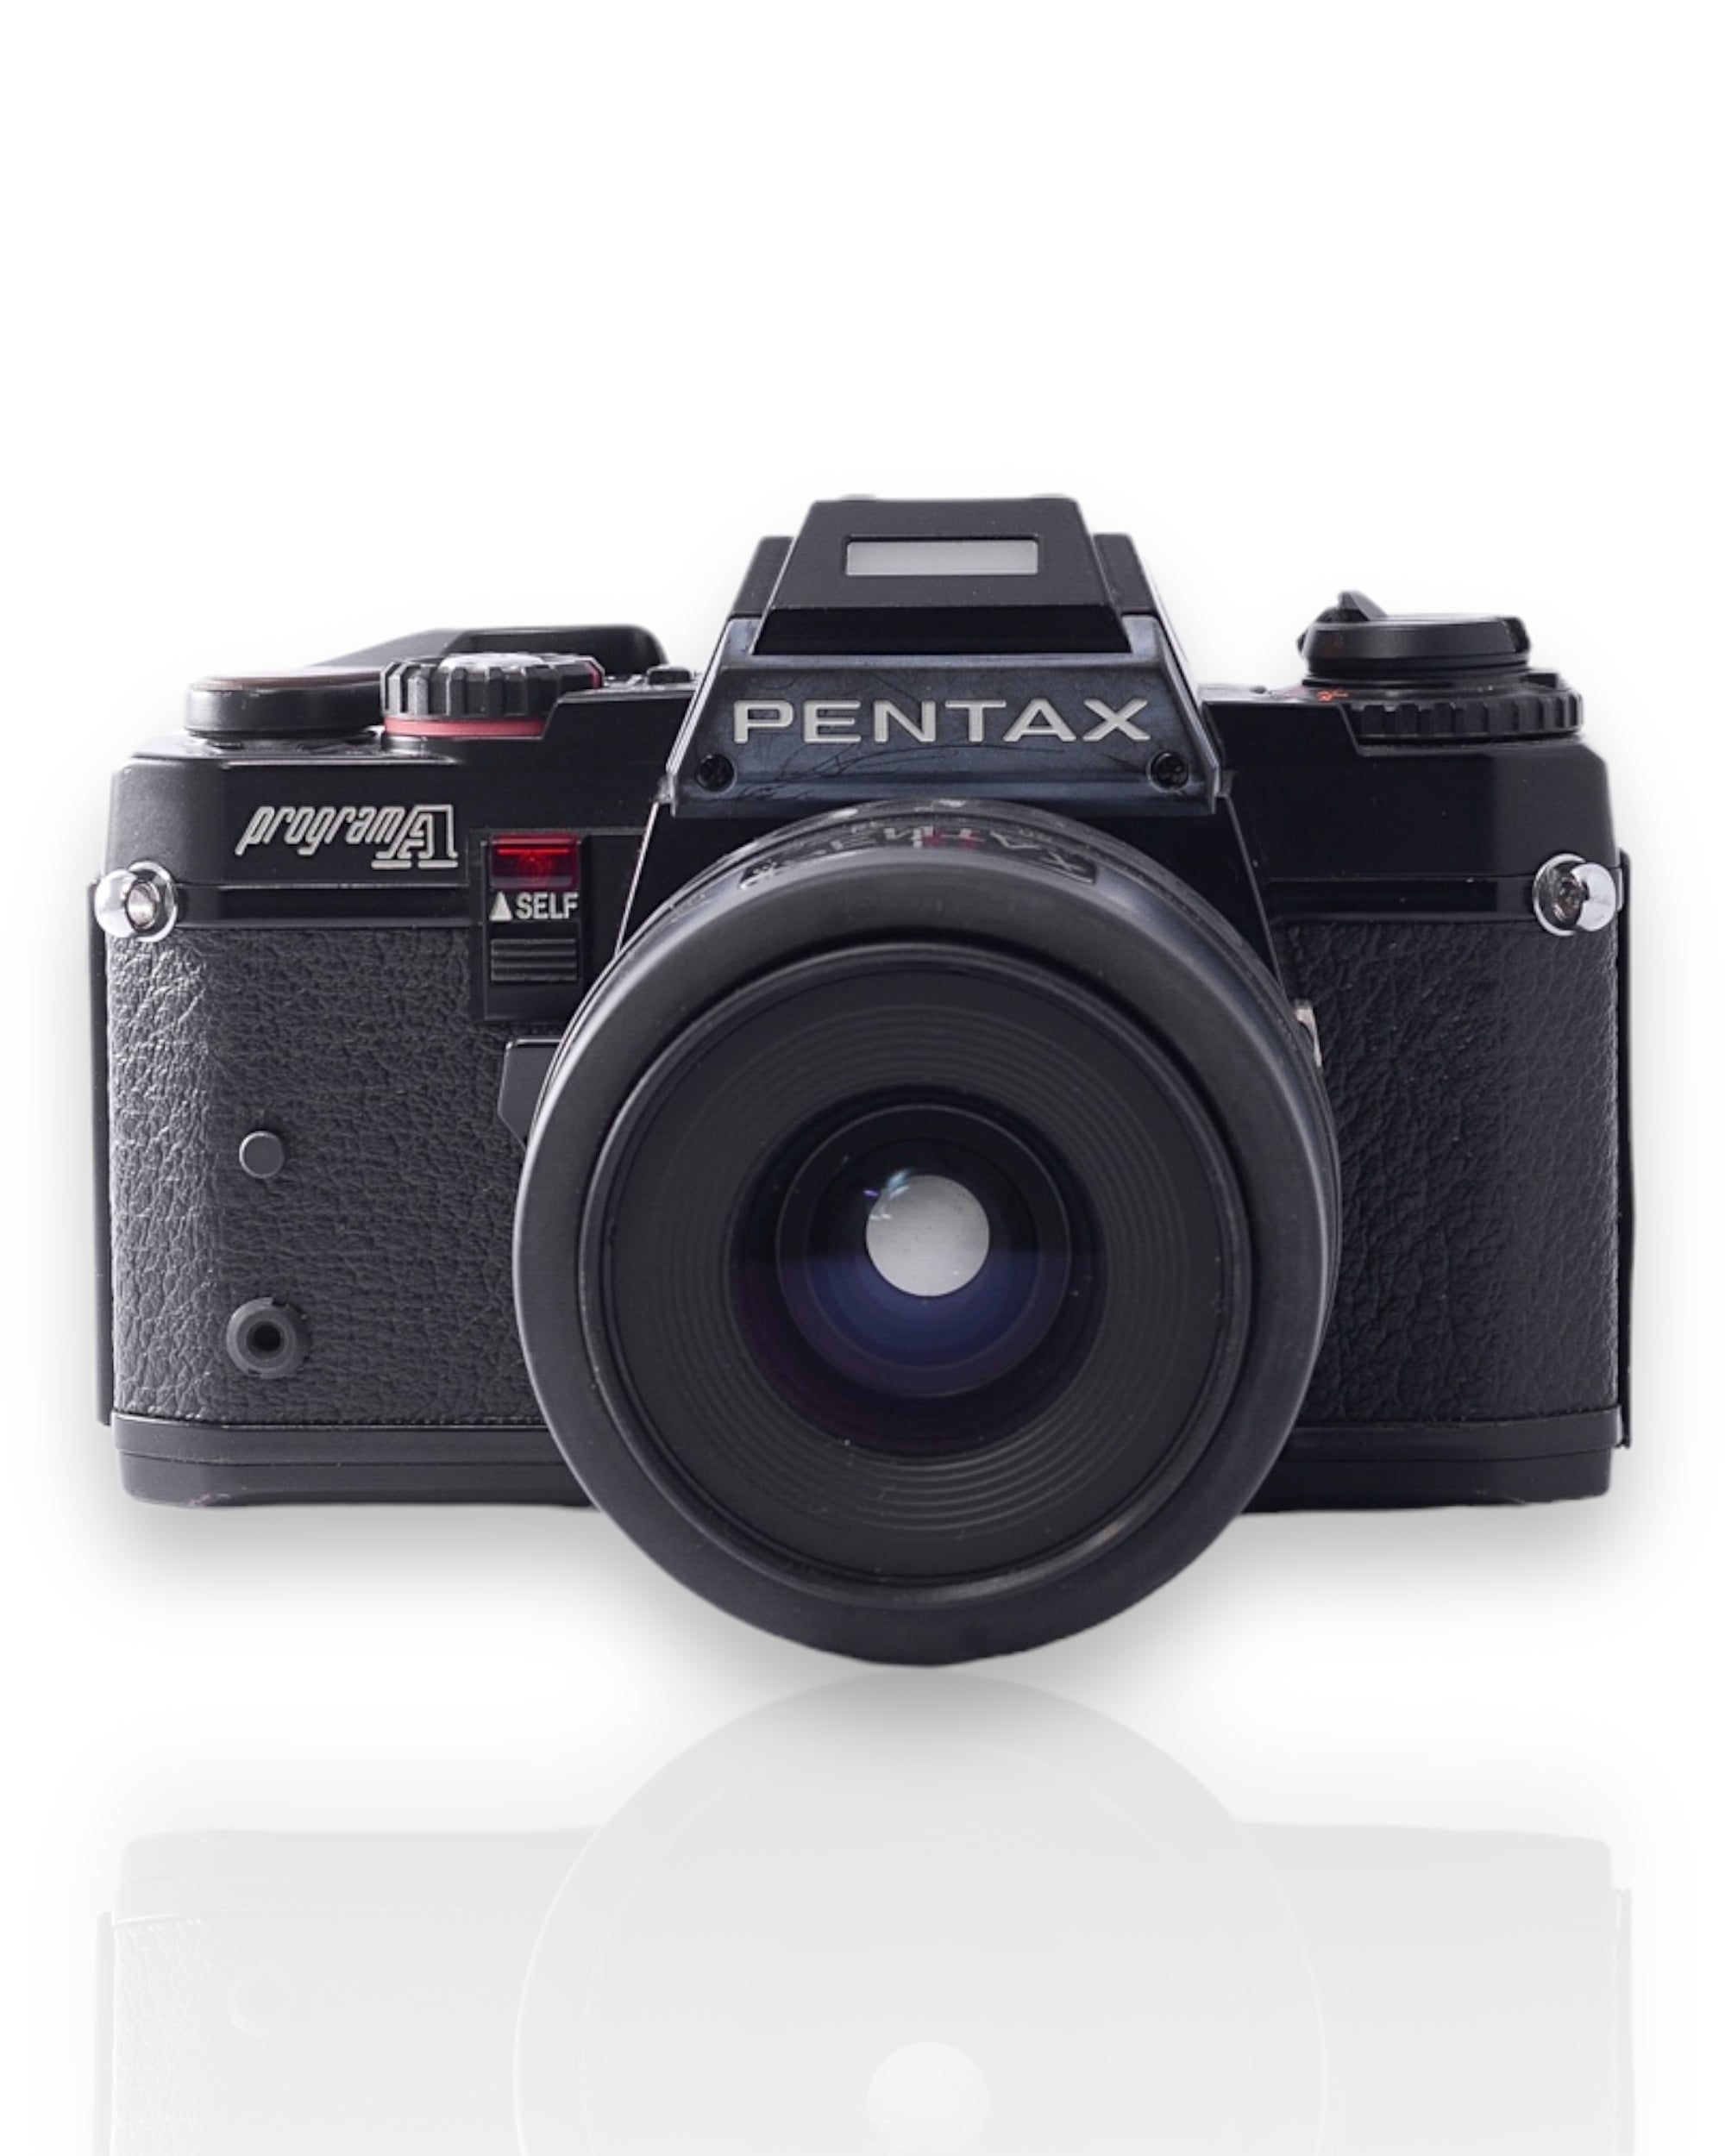 Pentax Program A 35mm SLR film camera with 35-80mm lens